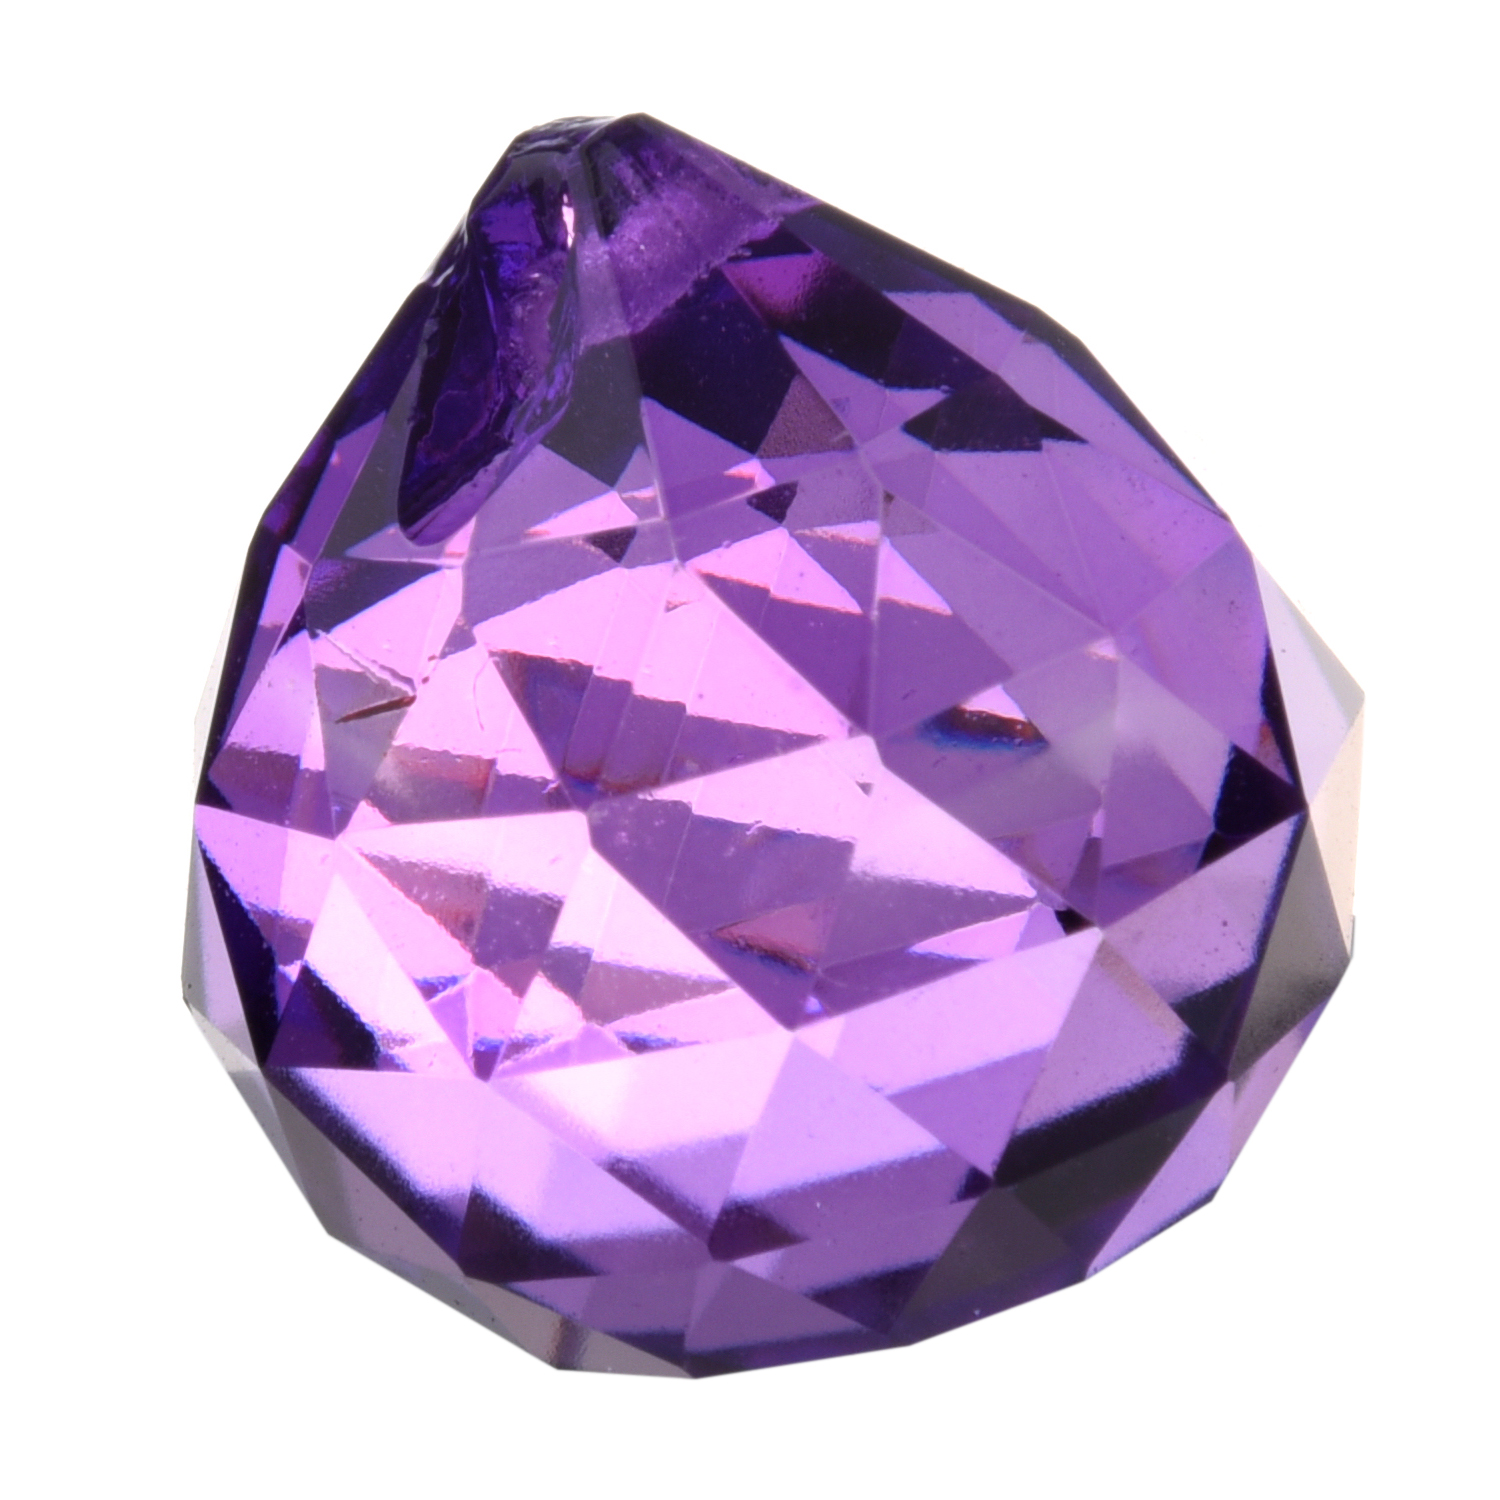 30mm Purple Crystal Ball Prisms AD 190268152761 | eBay